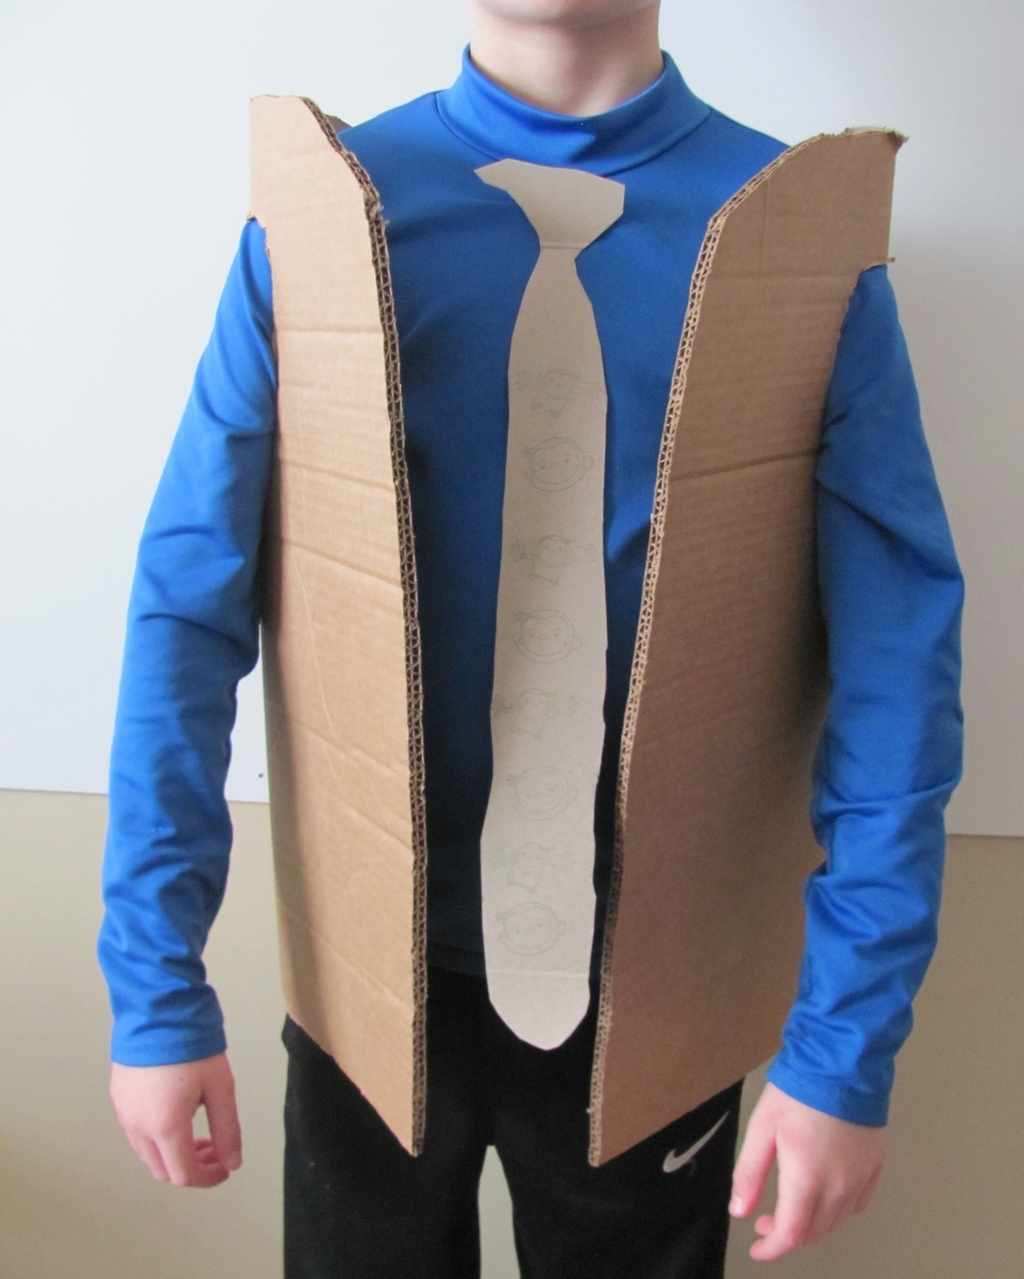 13-awesome-homemade-kid-cardboard-costumes